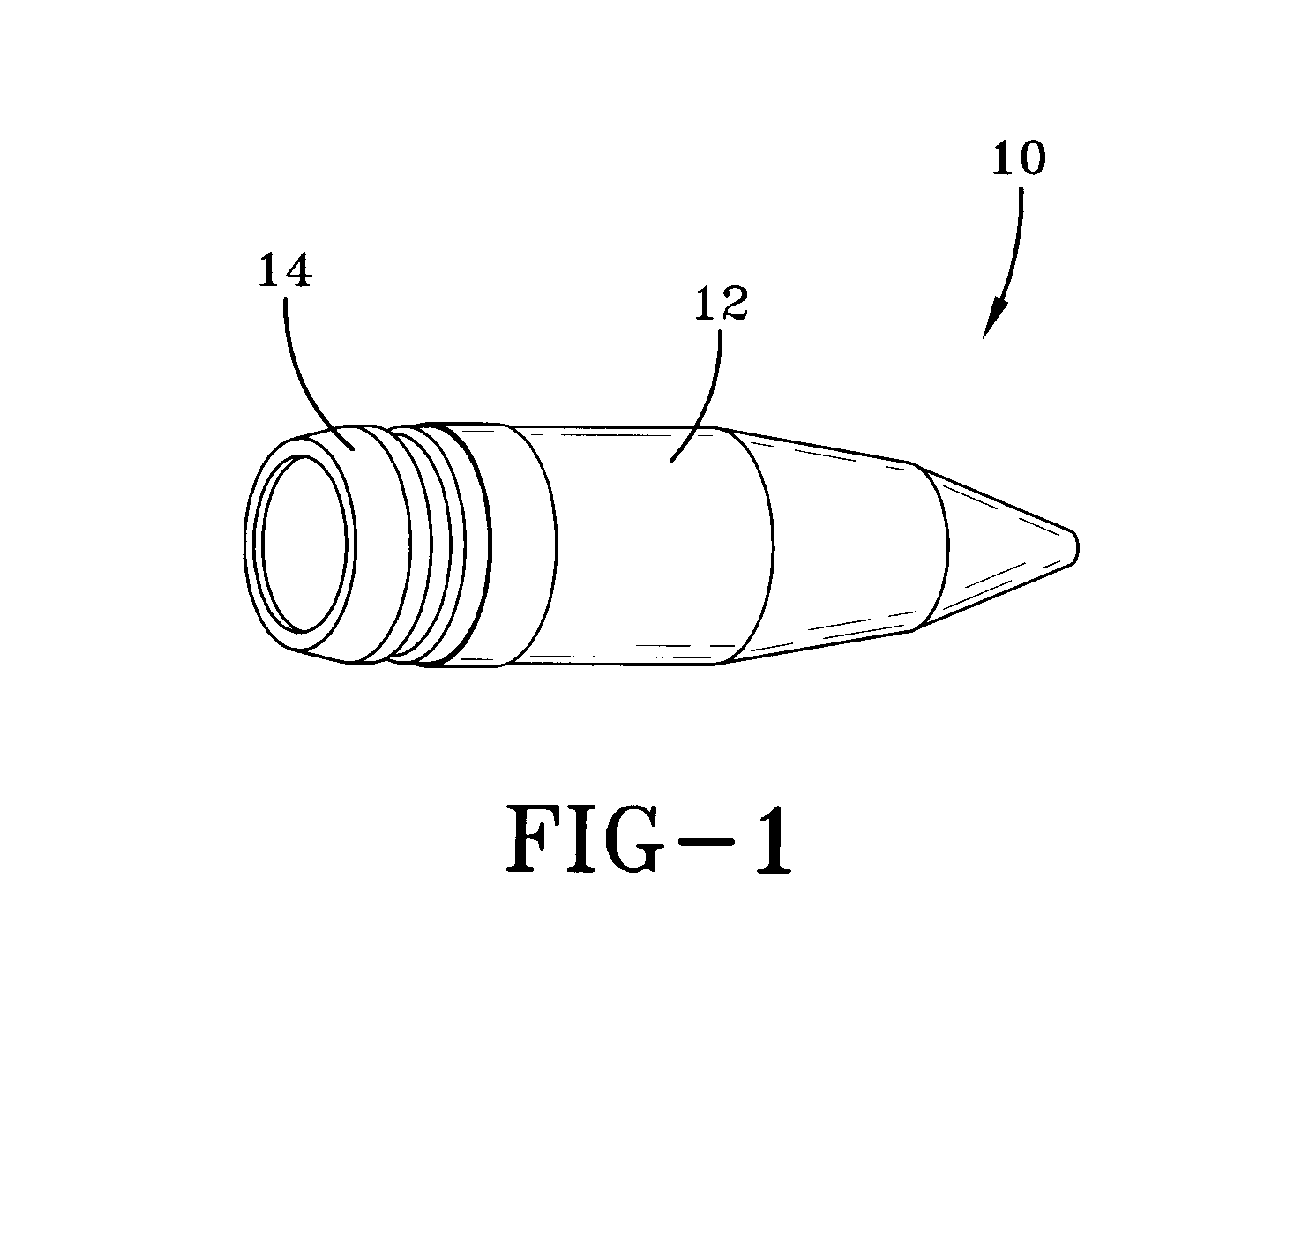 Base mounted airburst fuze for projectile